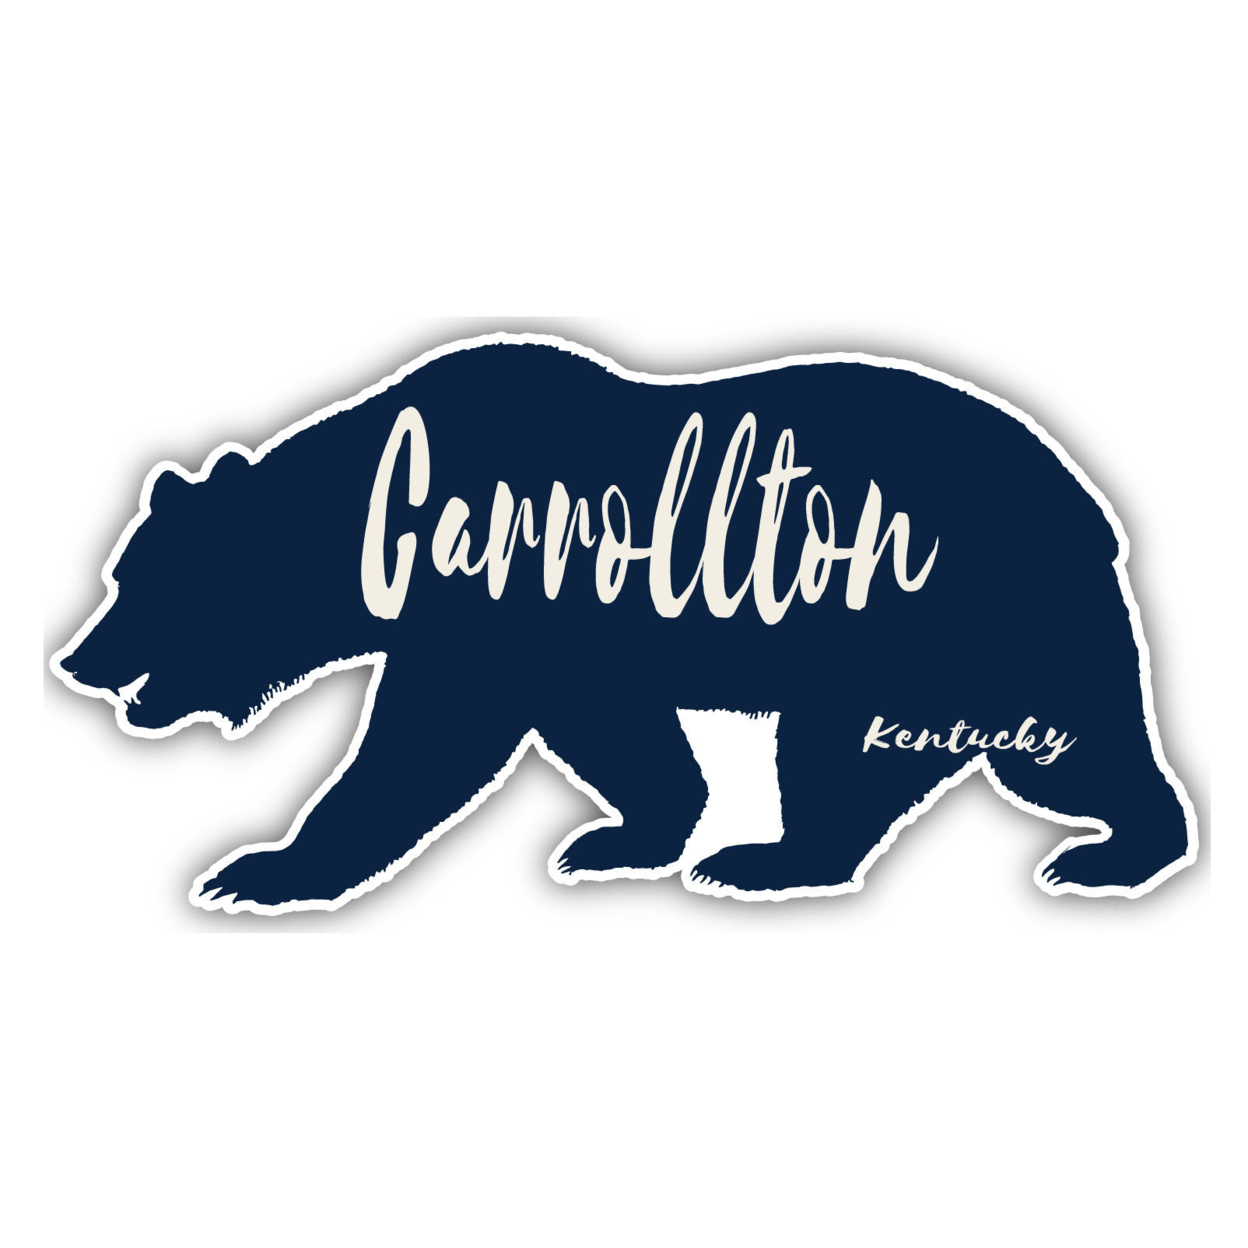 Carrollton Kentucky Souvenir Decorative Stickers (Choose Theme And Size) - Single Unit, 8-Inch, Bear